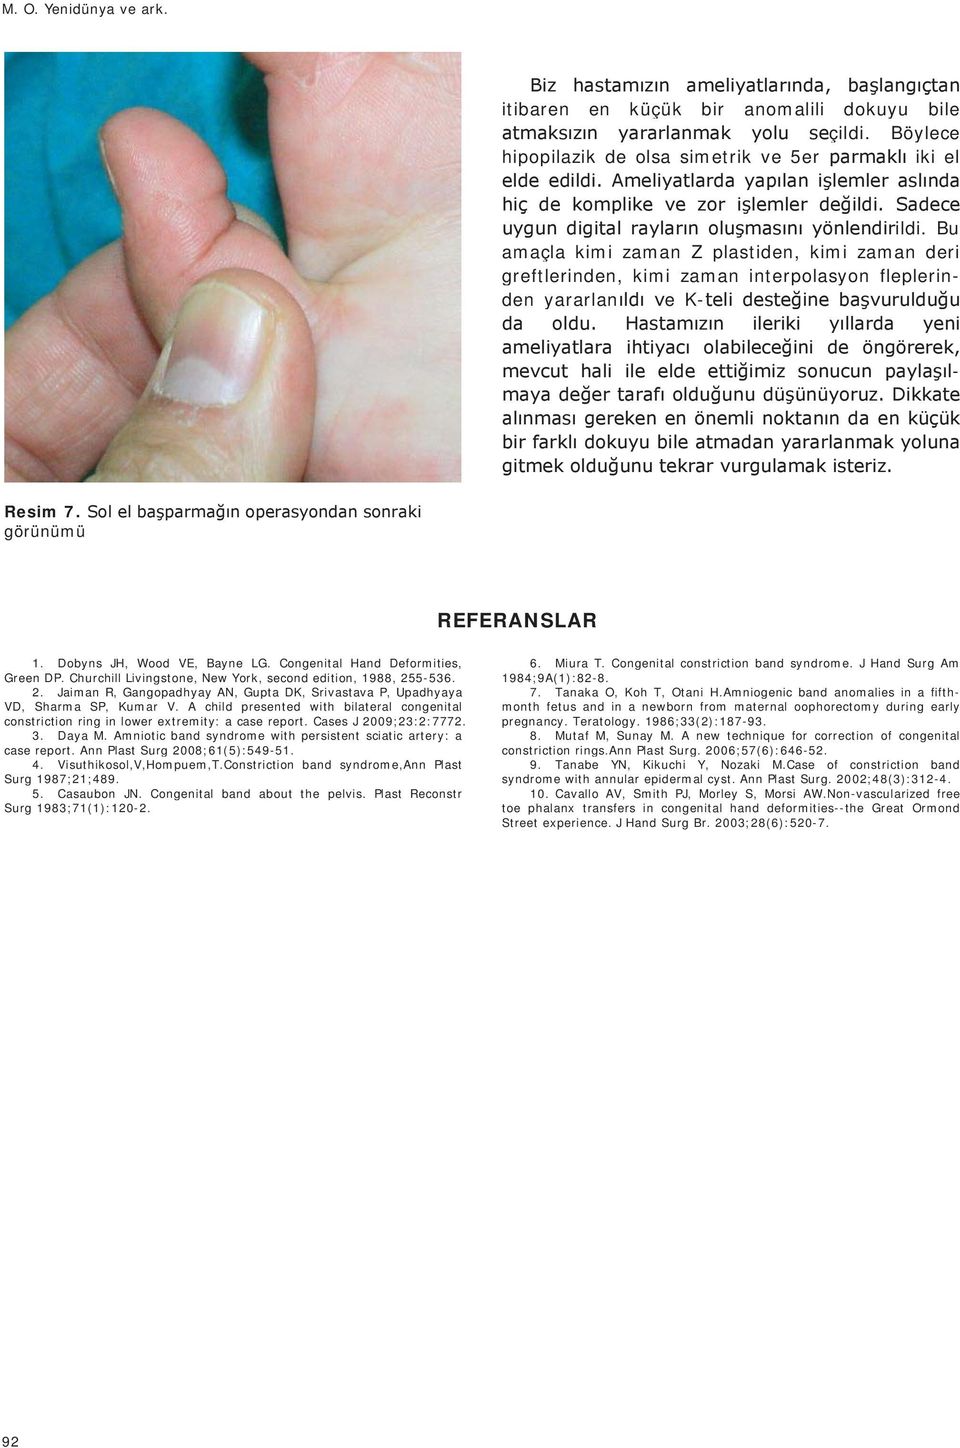 Congenital Hand Deformities, Green DP. Churchill Livingstone, New York, second edition, 1988, 255-536. 2. Jaiman R, Gangopadhyay AN, Gupta DK, Srivastava P, Upadhyaya VD, Sharma SP, Kumar V.